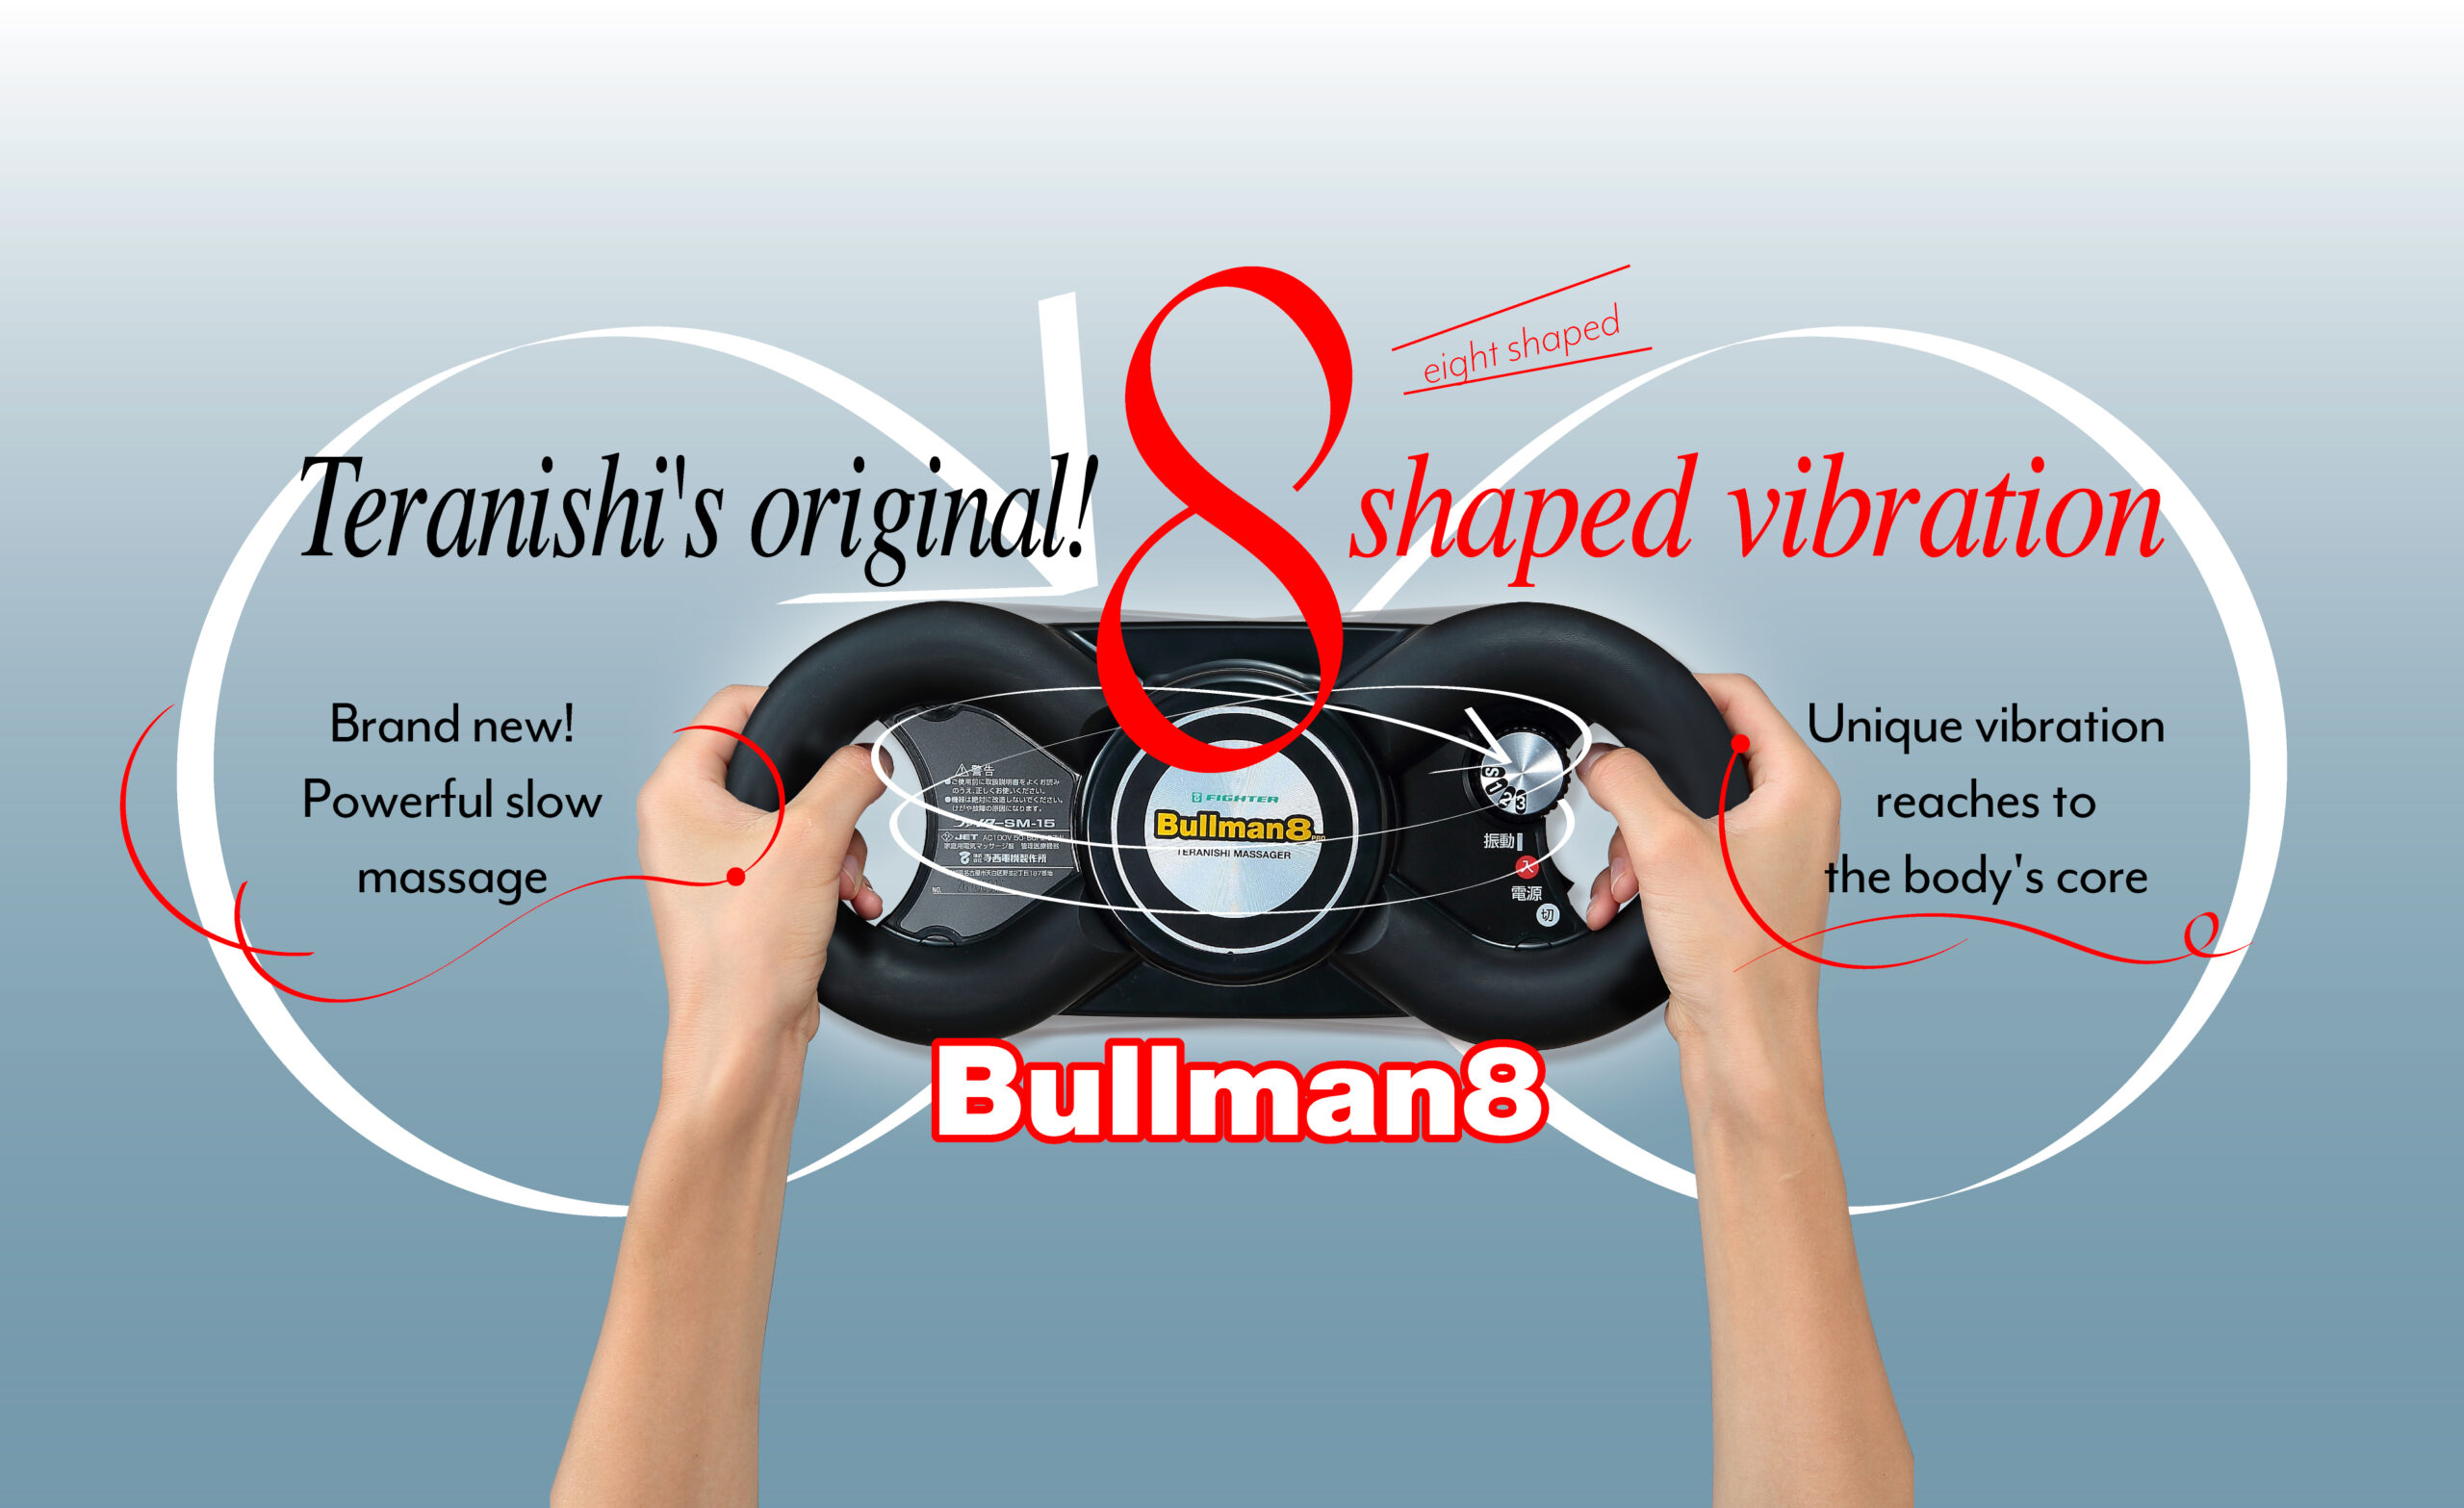 8 shaped vibration Bullman8